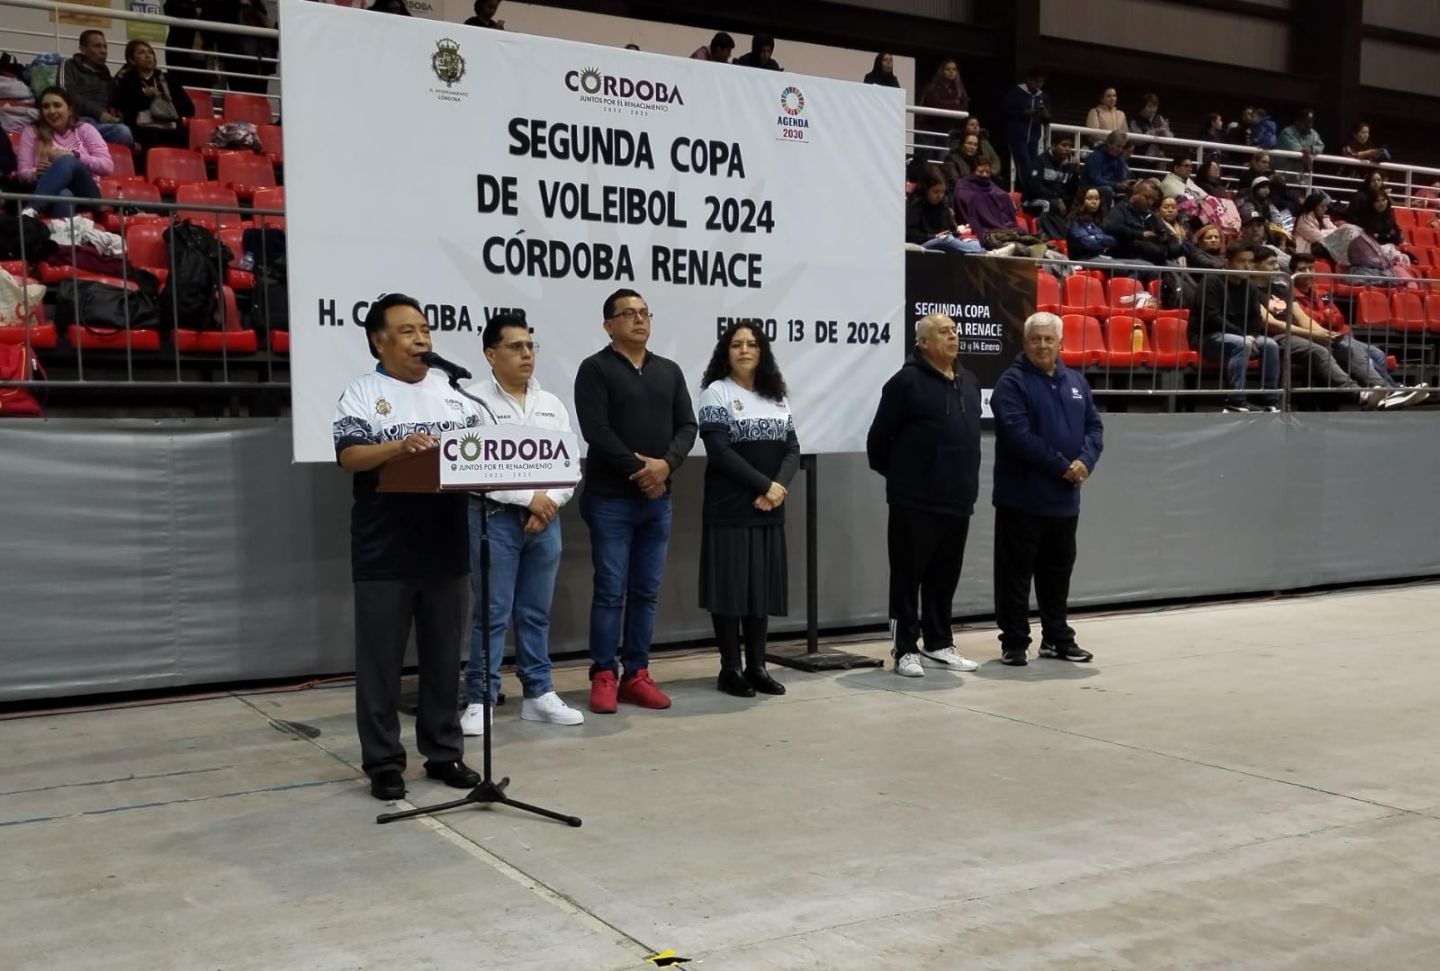 Inauguran autoridades la Copa de vóleibol "Córdoba Renace 2024"